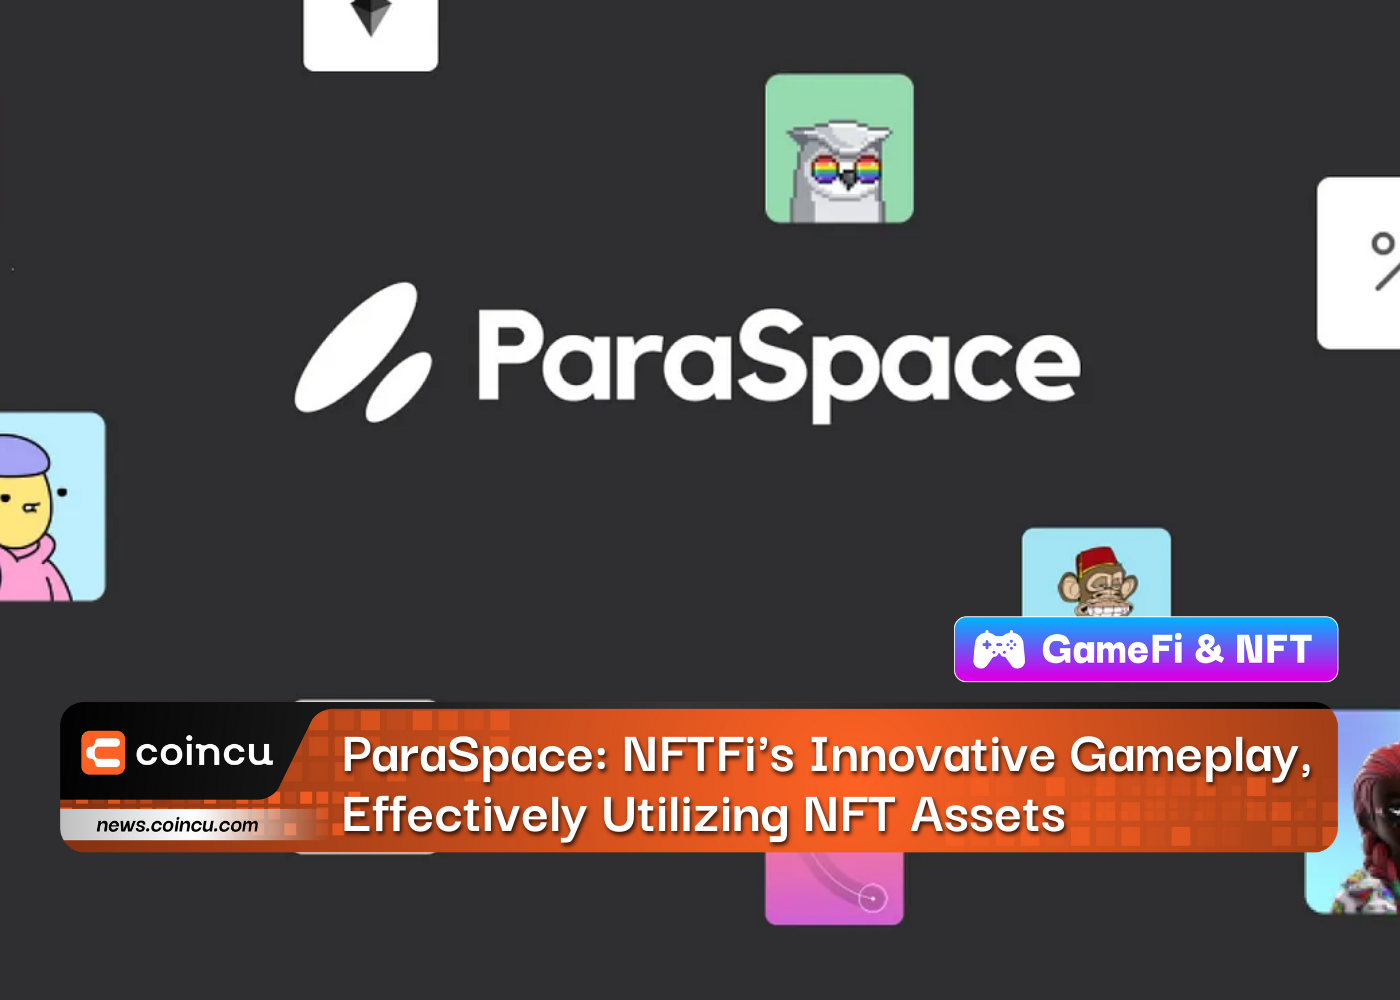 ParaSpace: NFTFi's Innovative Gameplay, Effectively Utilizing NFT Assets